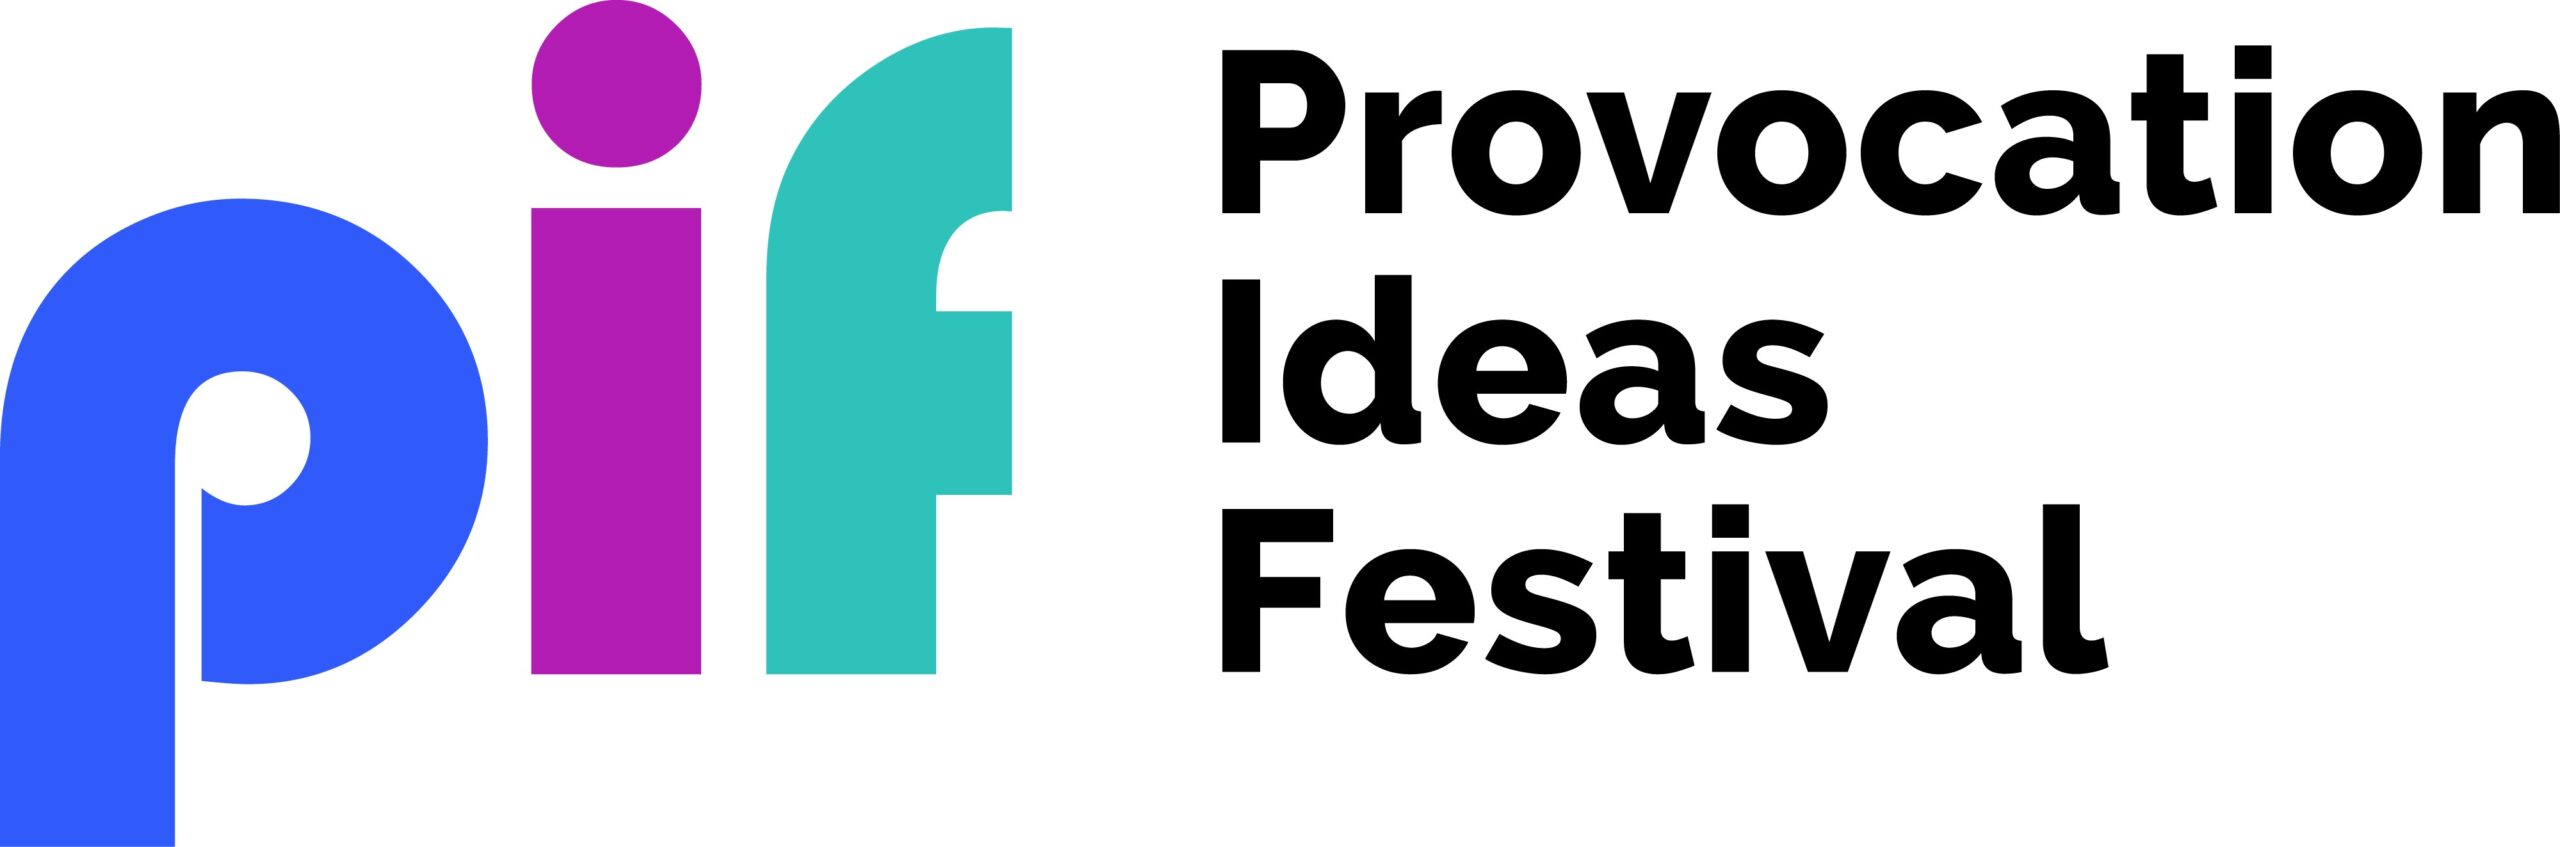 Provocation Ideas Festival Logo